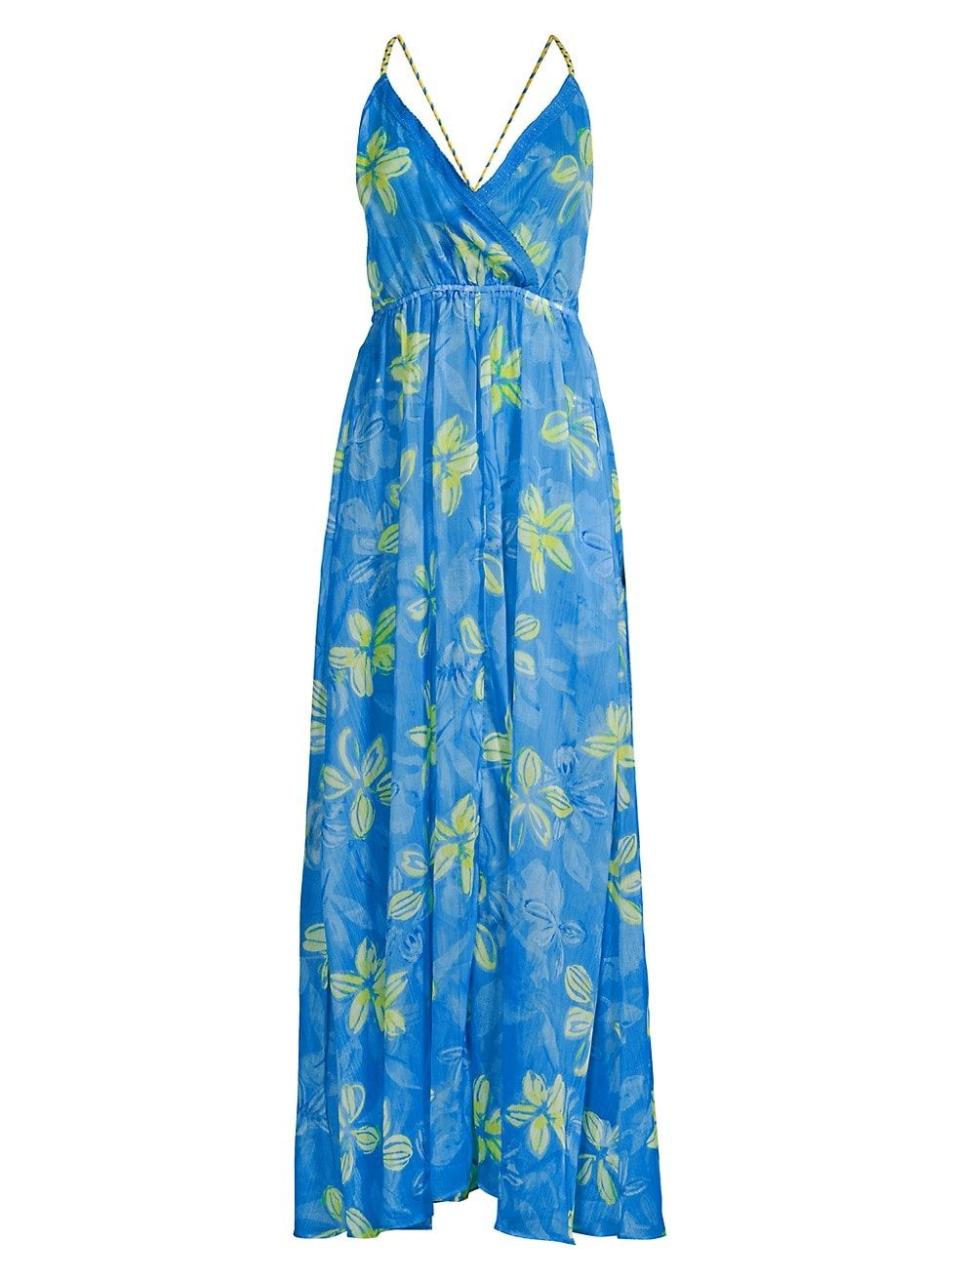 2) Cienna Floral Maxi Dress